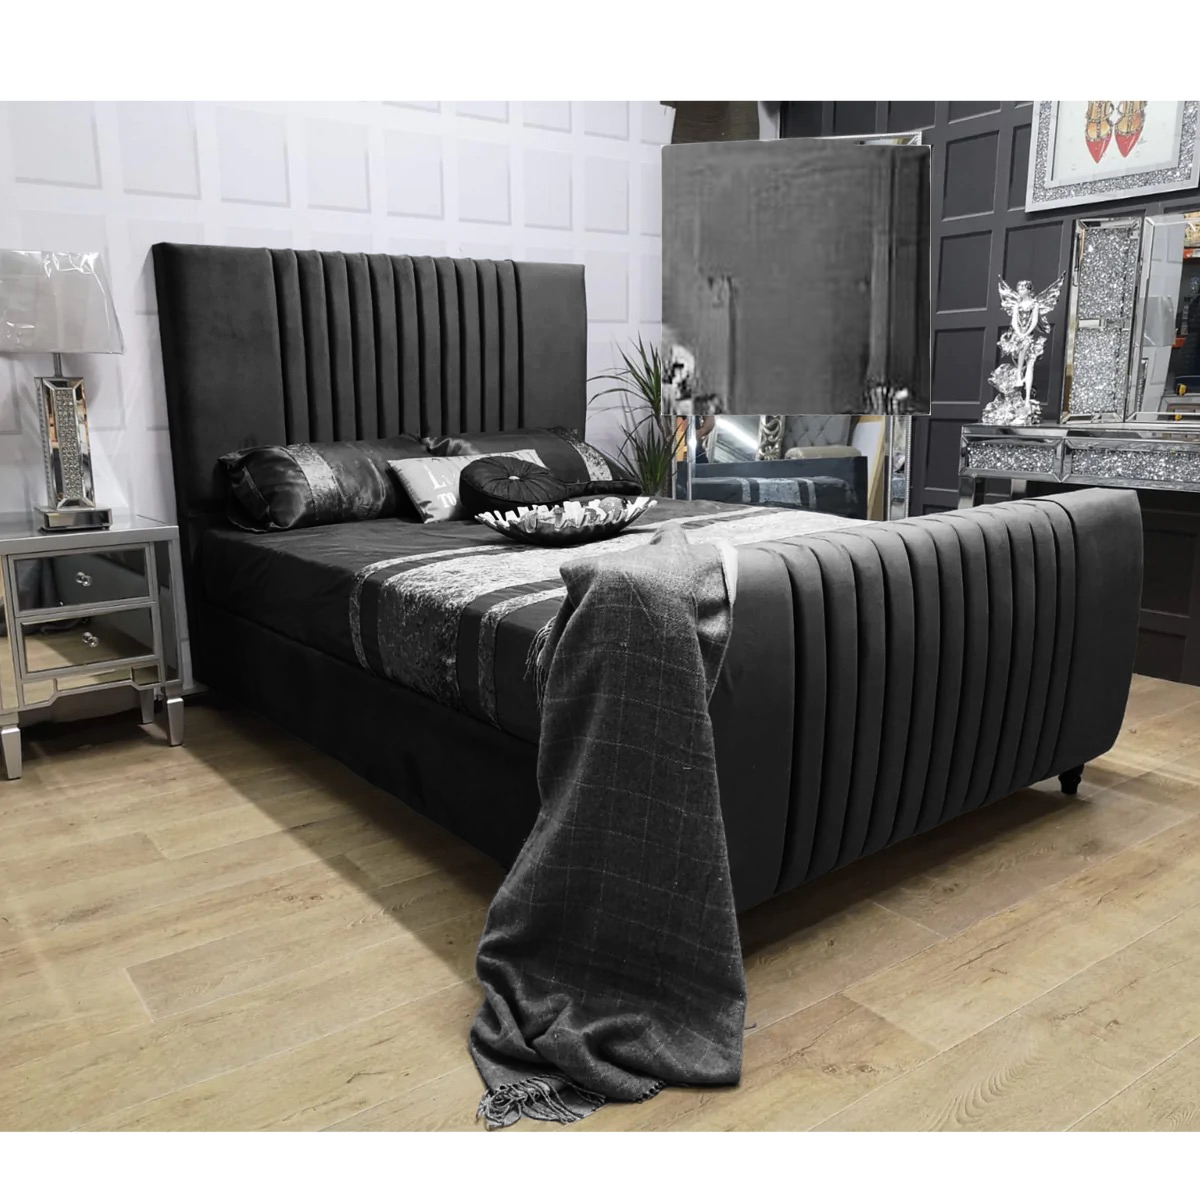 IKEA Upholstered Simple Design Ottoman Bed Britainsleep